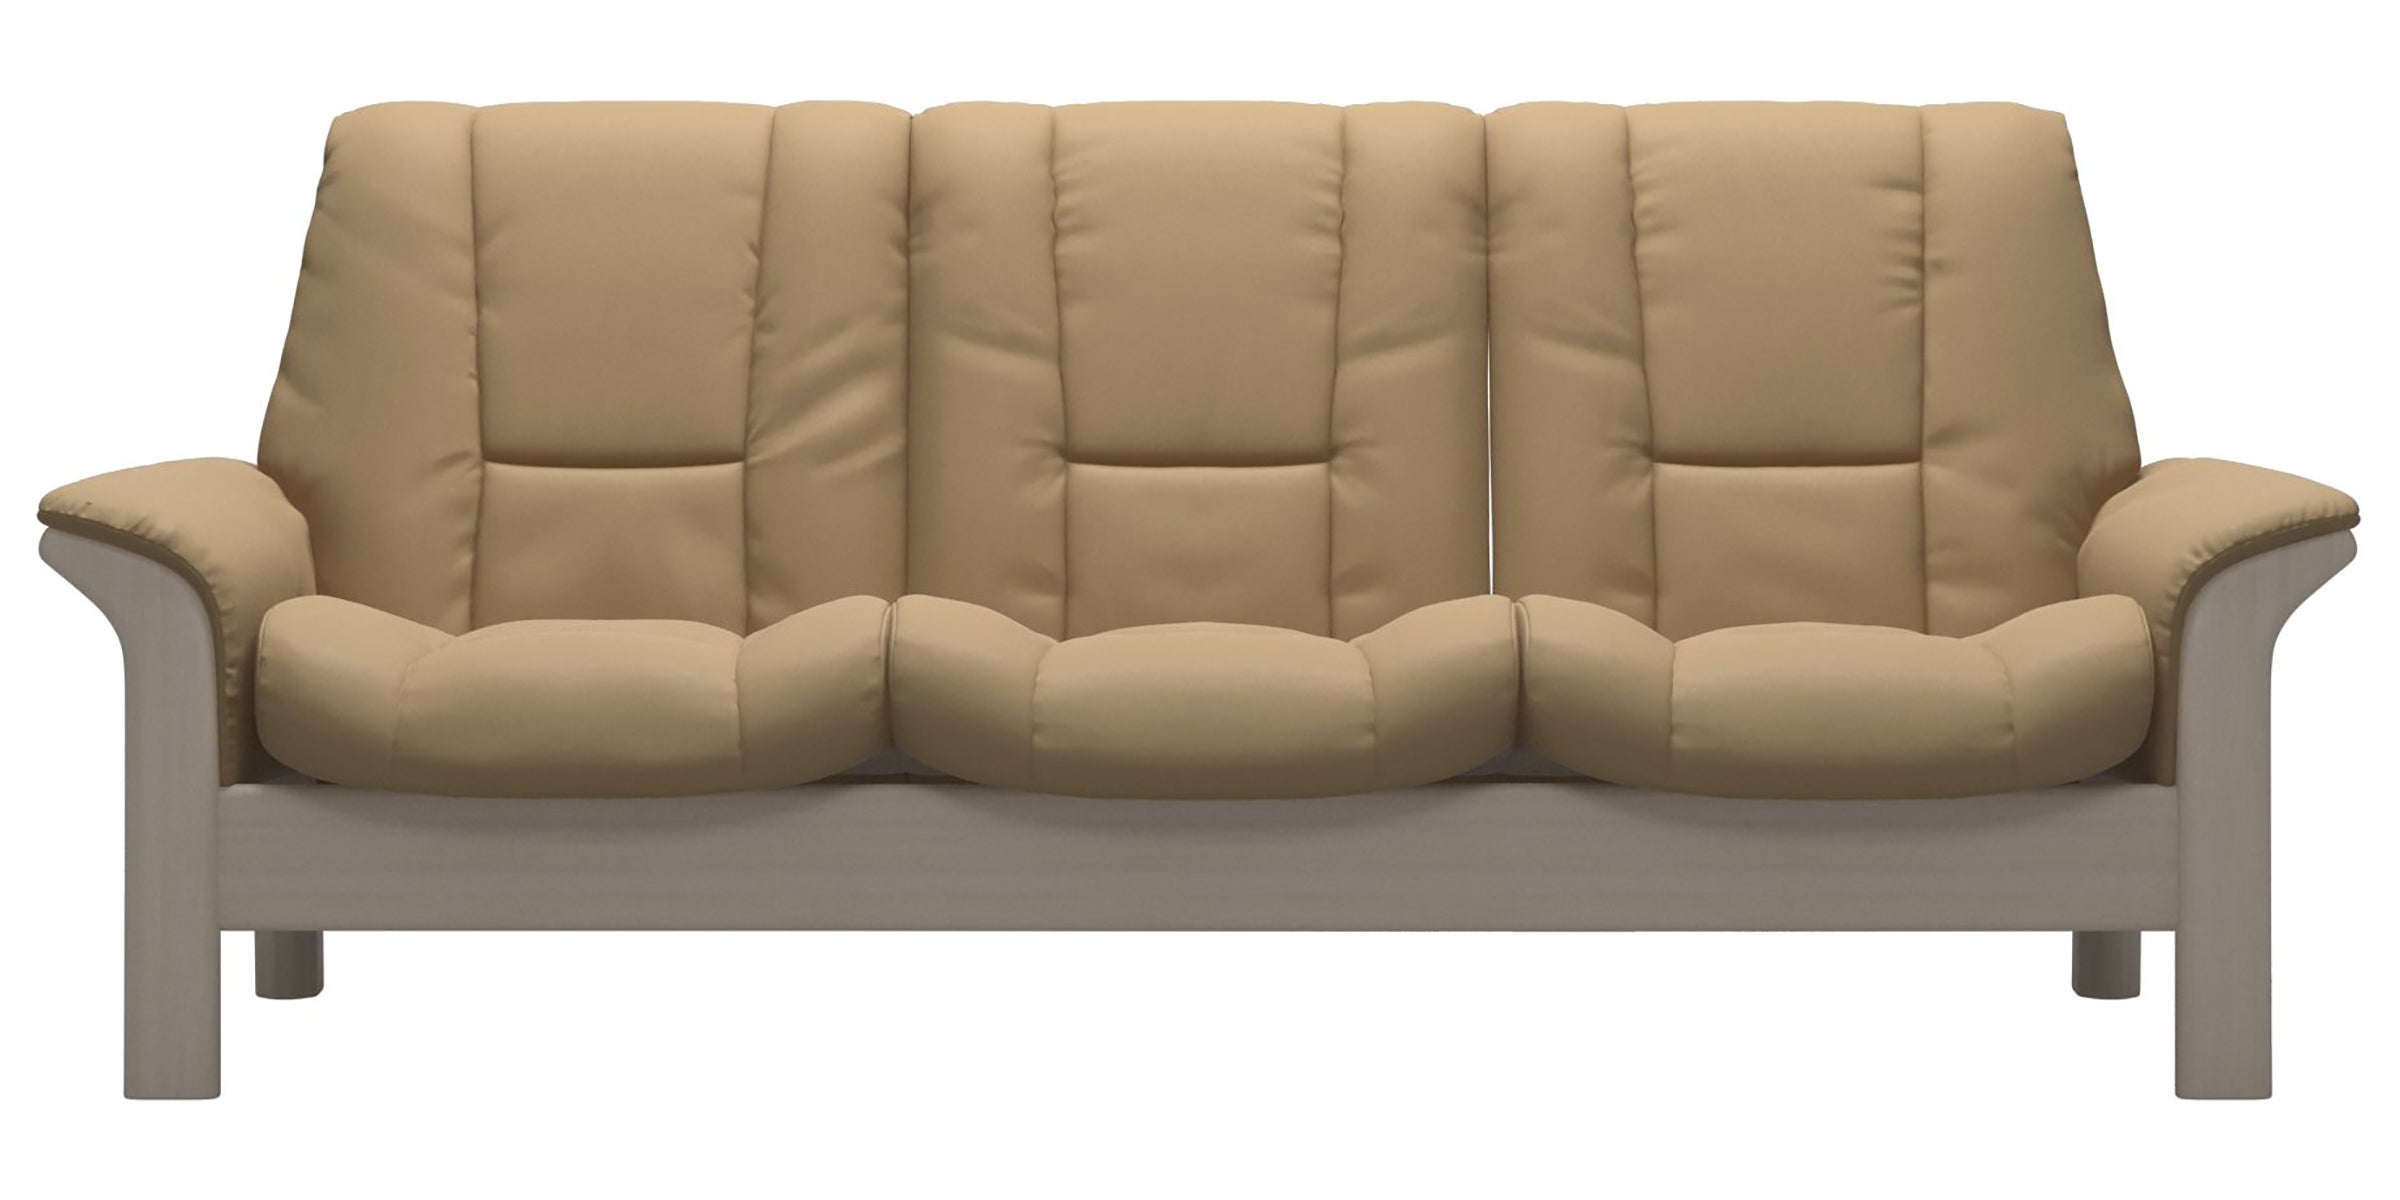 Paloma Leather Sand and Whitewash Base | Stressless Windsor 3-Seater Low Back Sofa | Valley Ridge Furniture